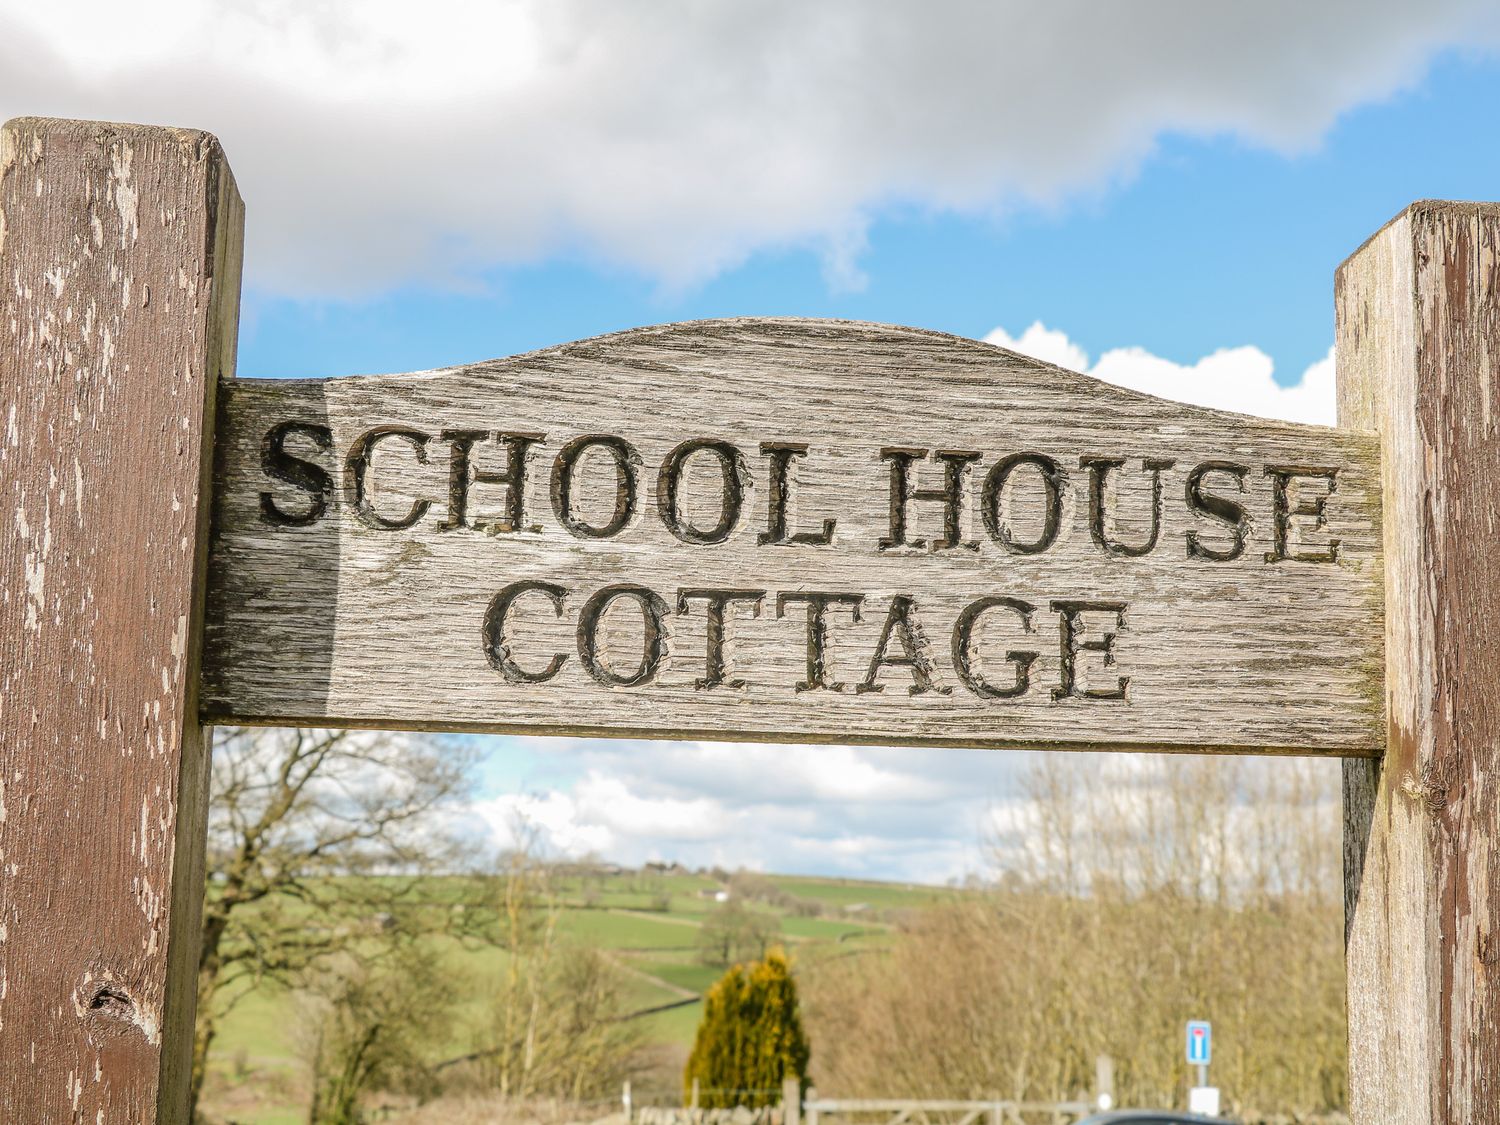 School House Cottage, Longnor